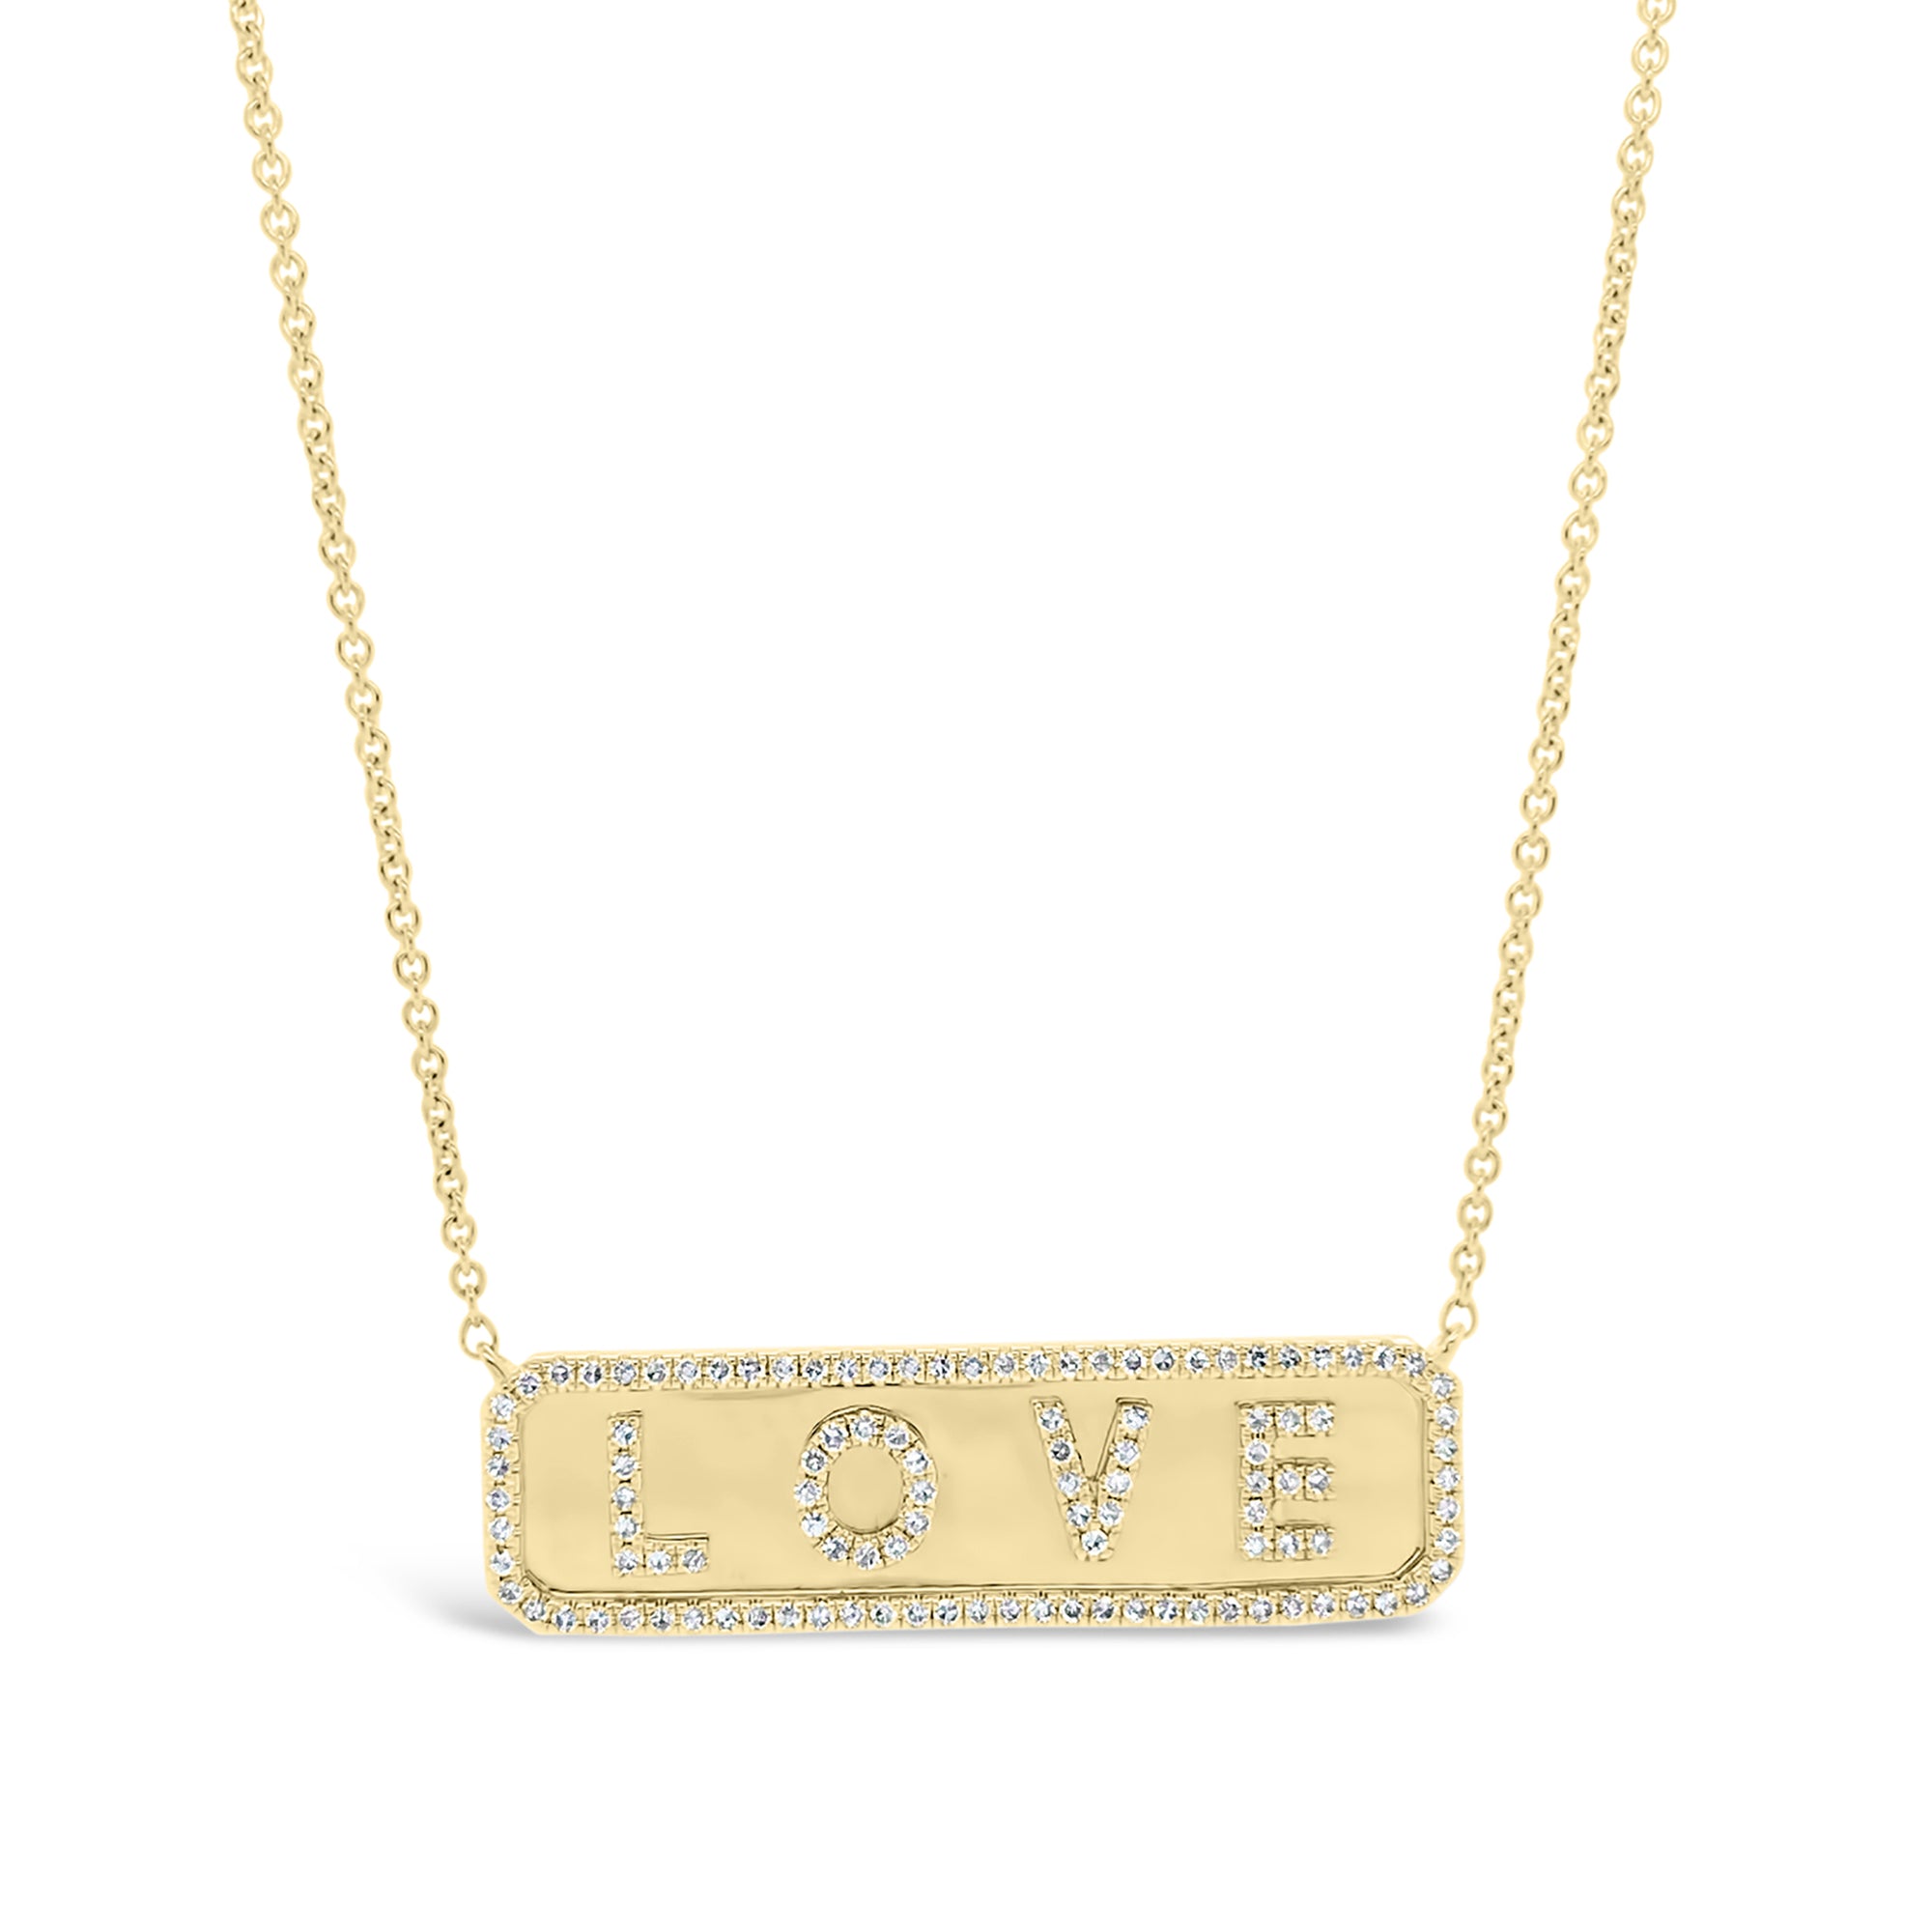 Diamond ‘LOVE’ Bar Necklace   -14K gold weighing 4.60 grams  -111 round diamonds totaling 0.37 carats